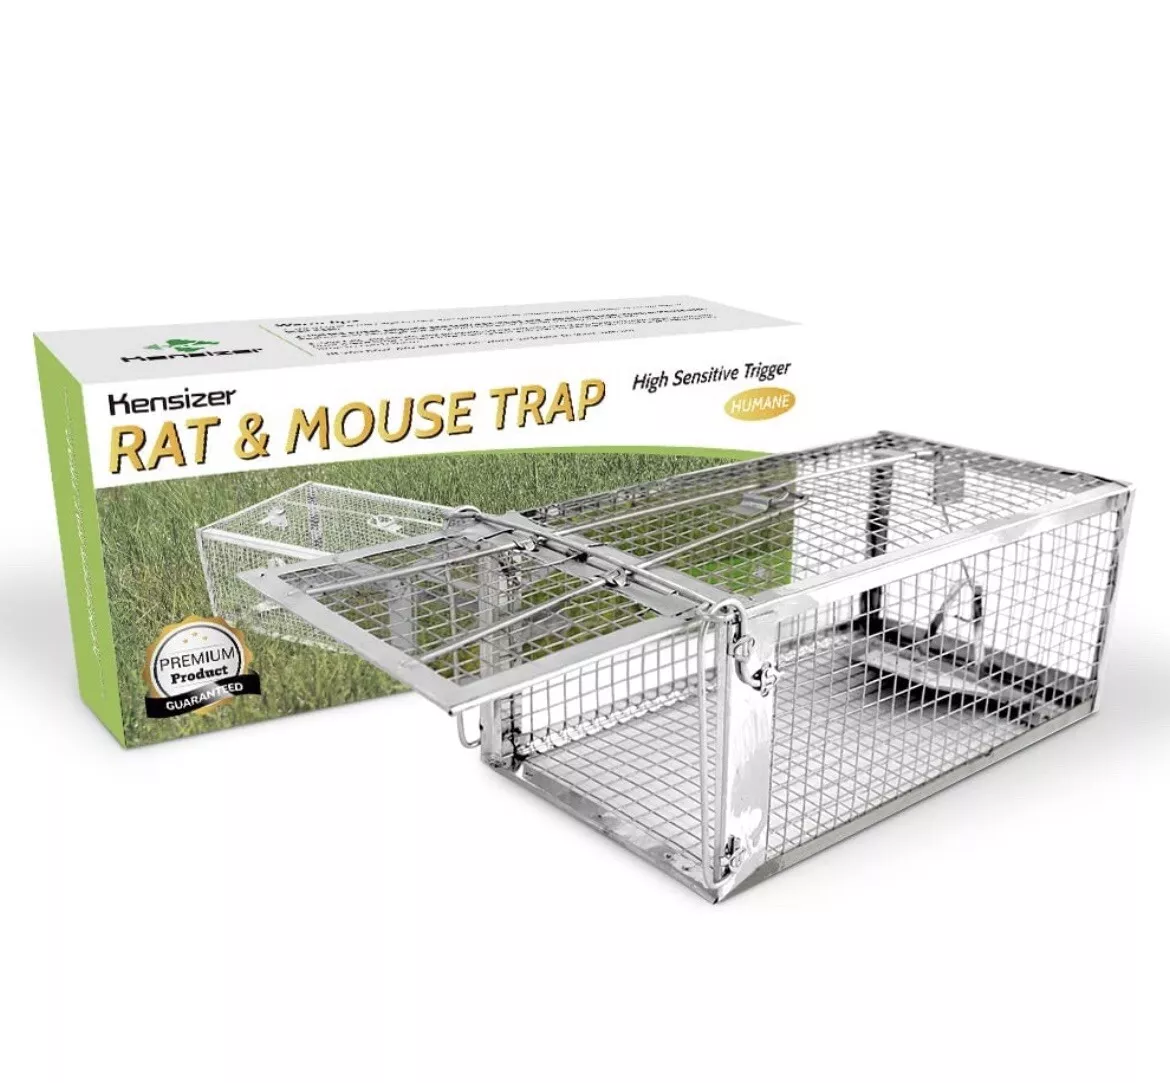 Kensizer Animal Humane Live Cage Trap For Rat, Mouse, Chipmunk - Medium,  Silver